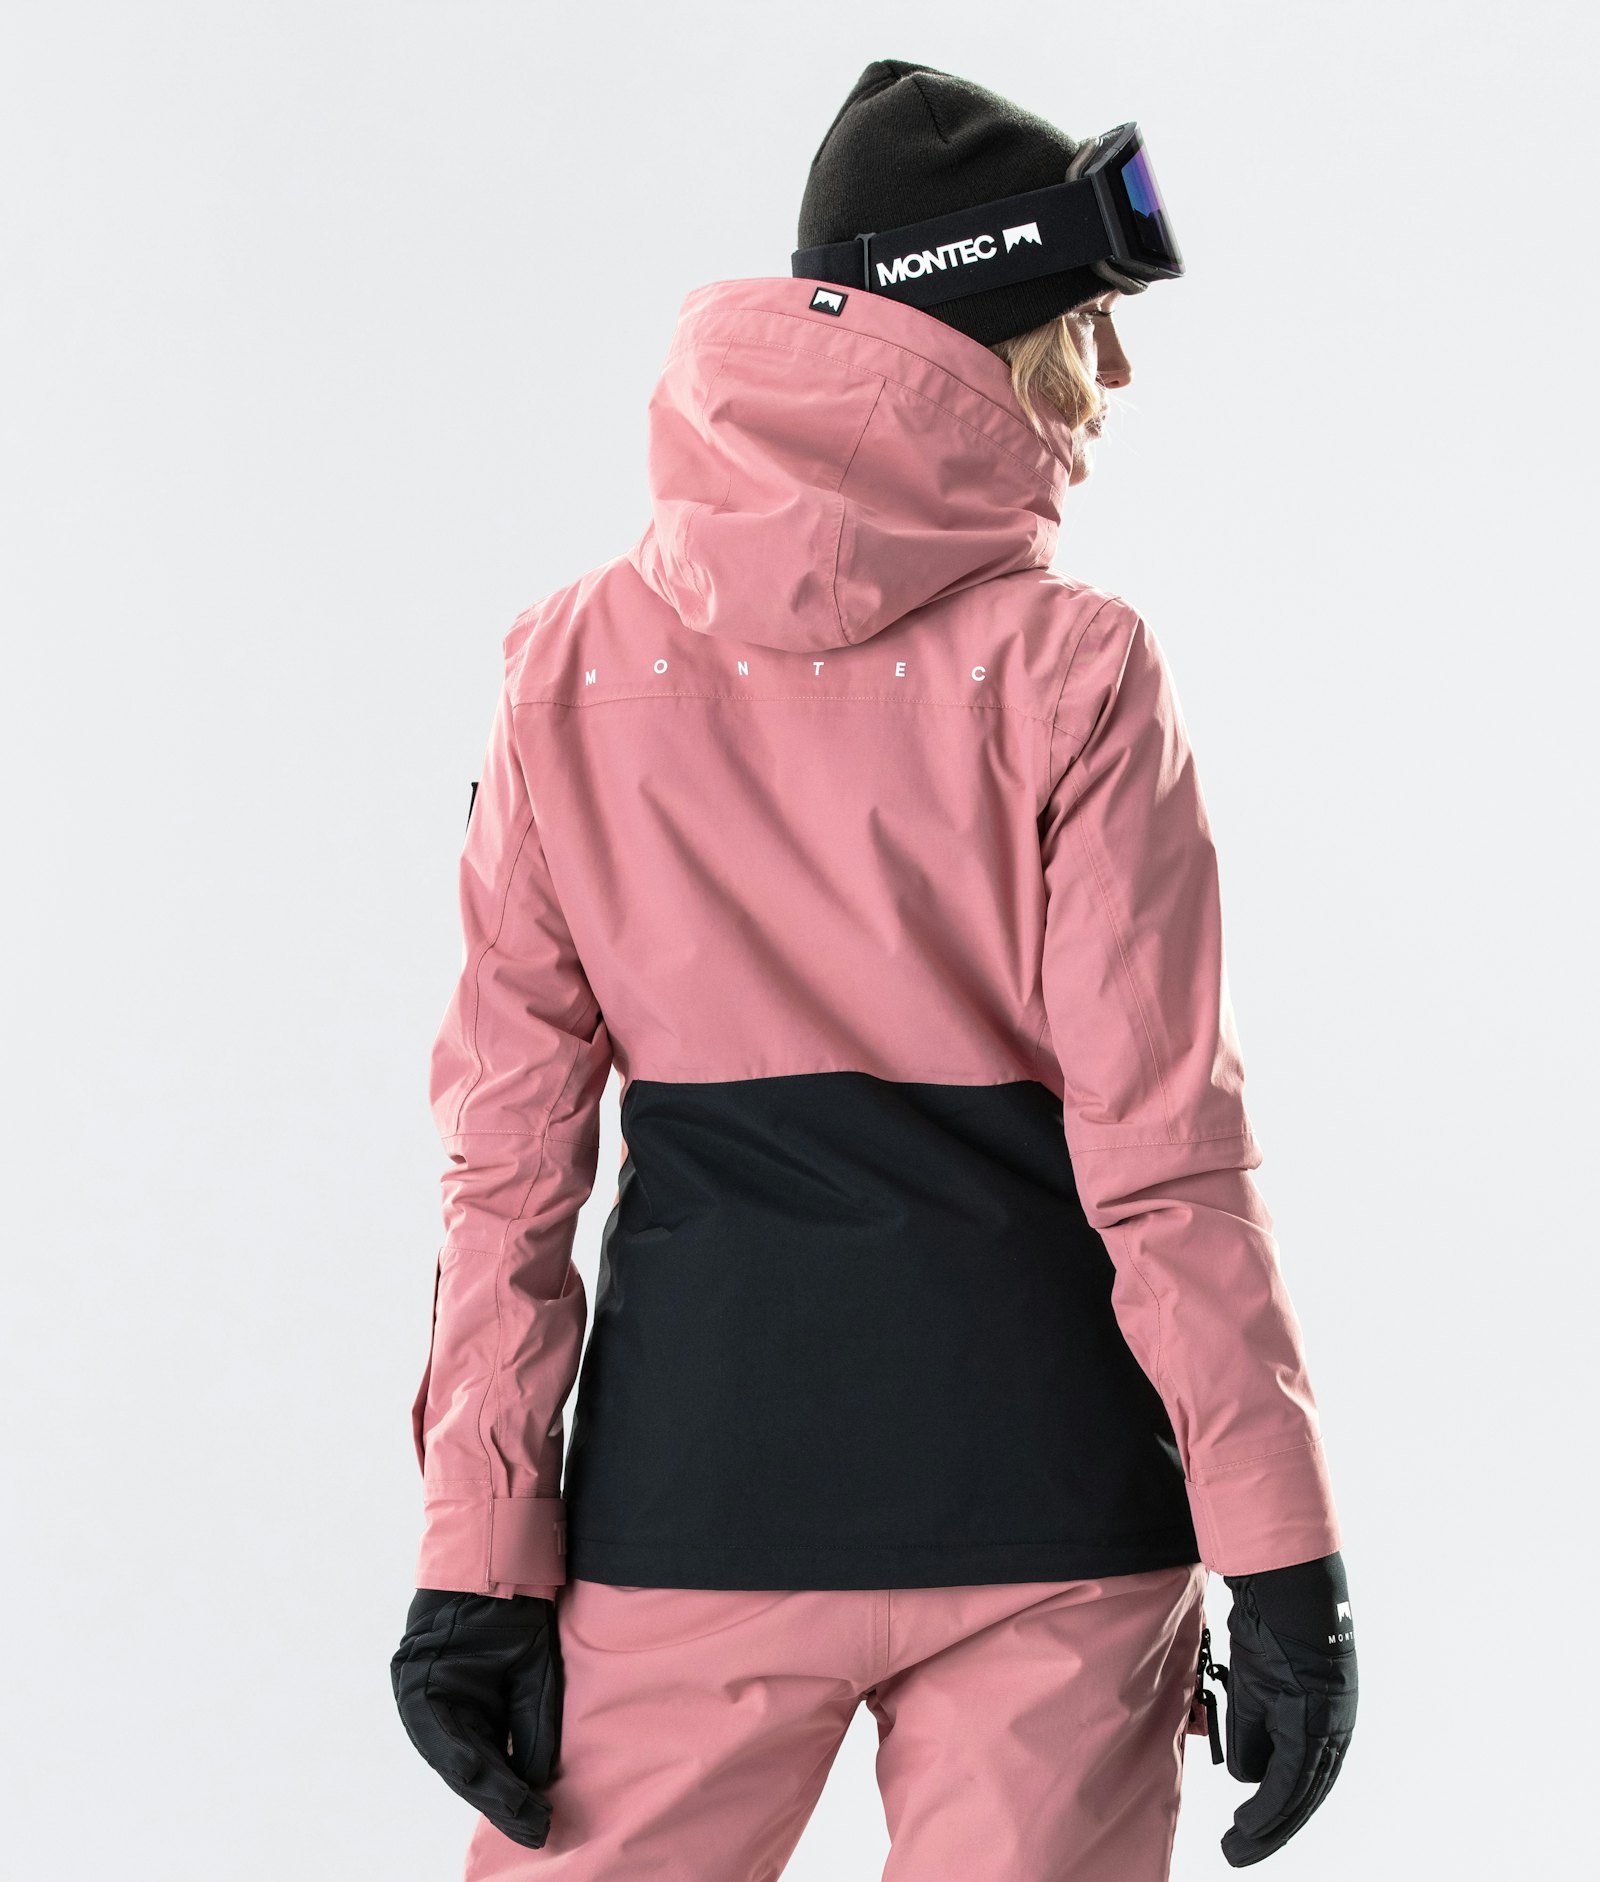 Moss W 2020 Veste Snowboard Femme Pink/Black